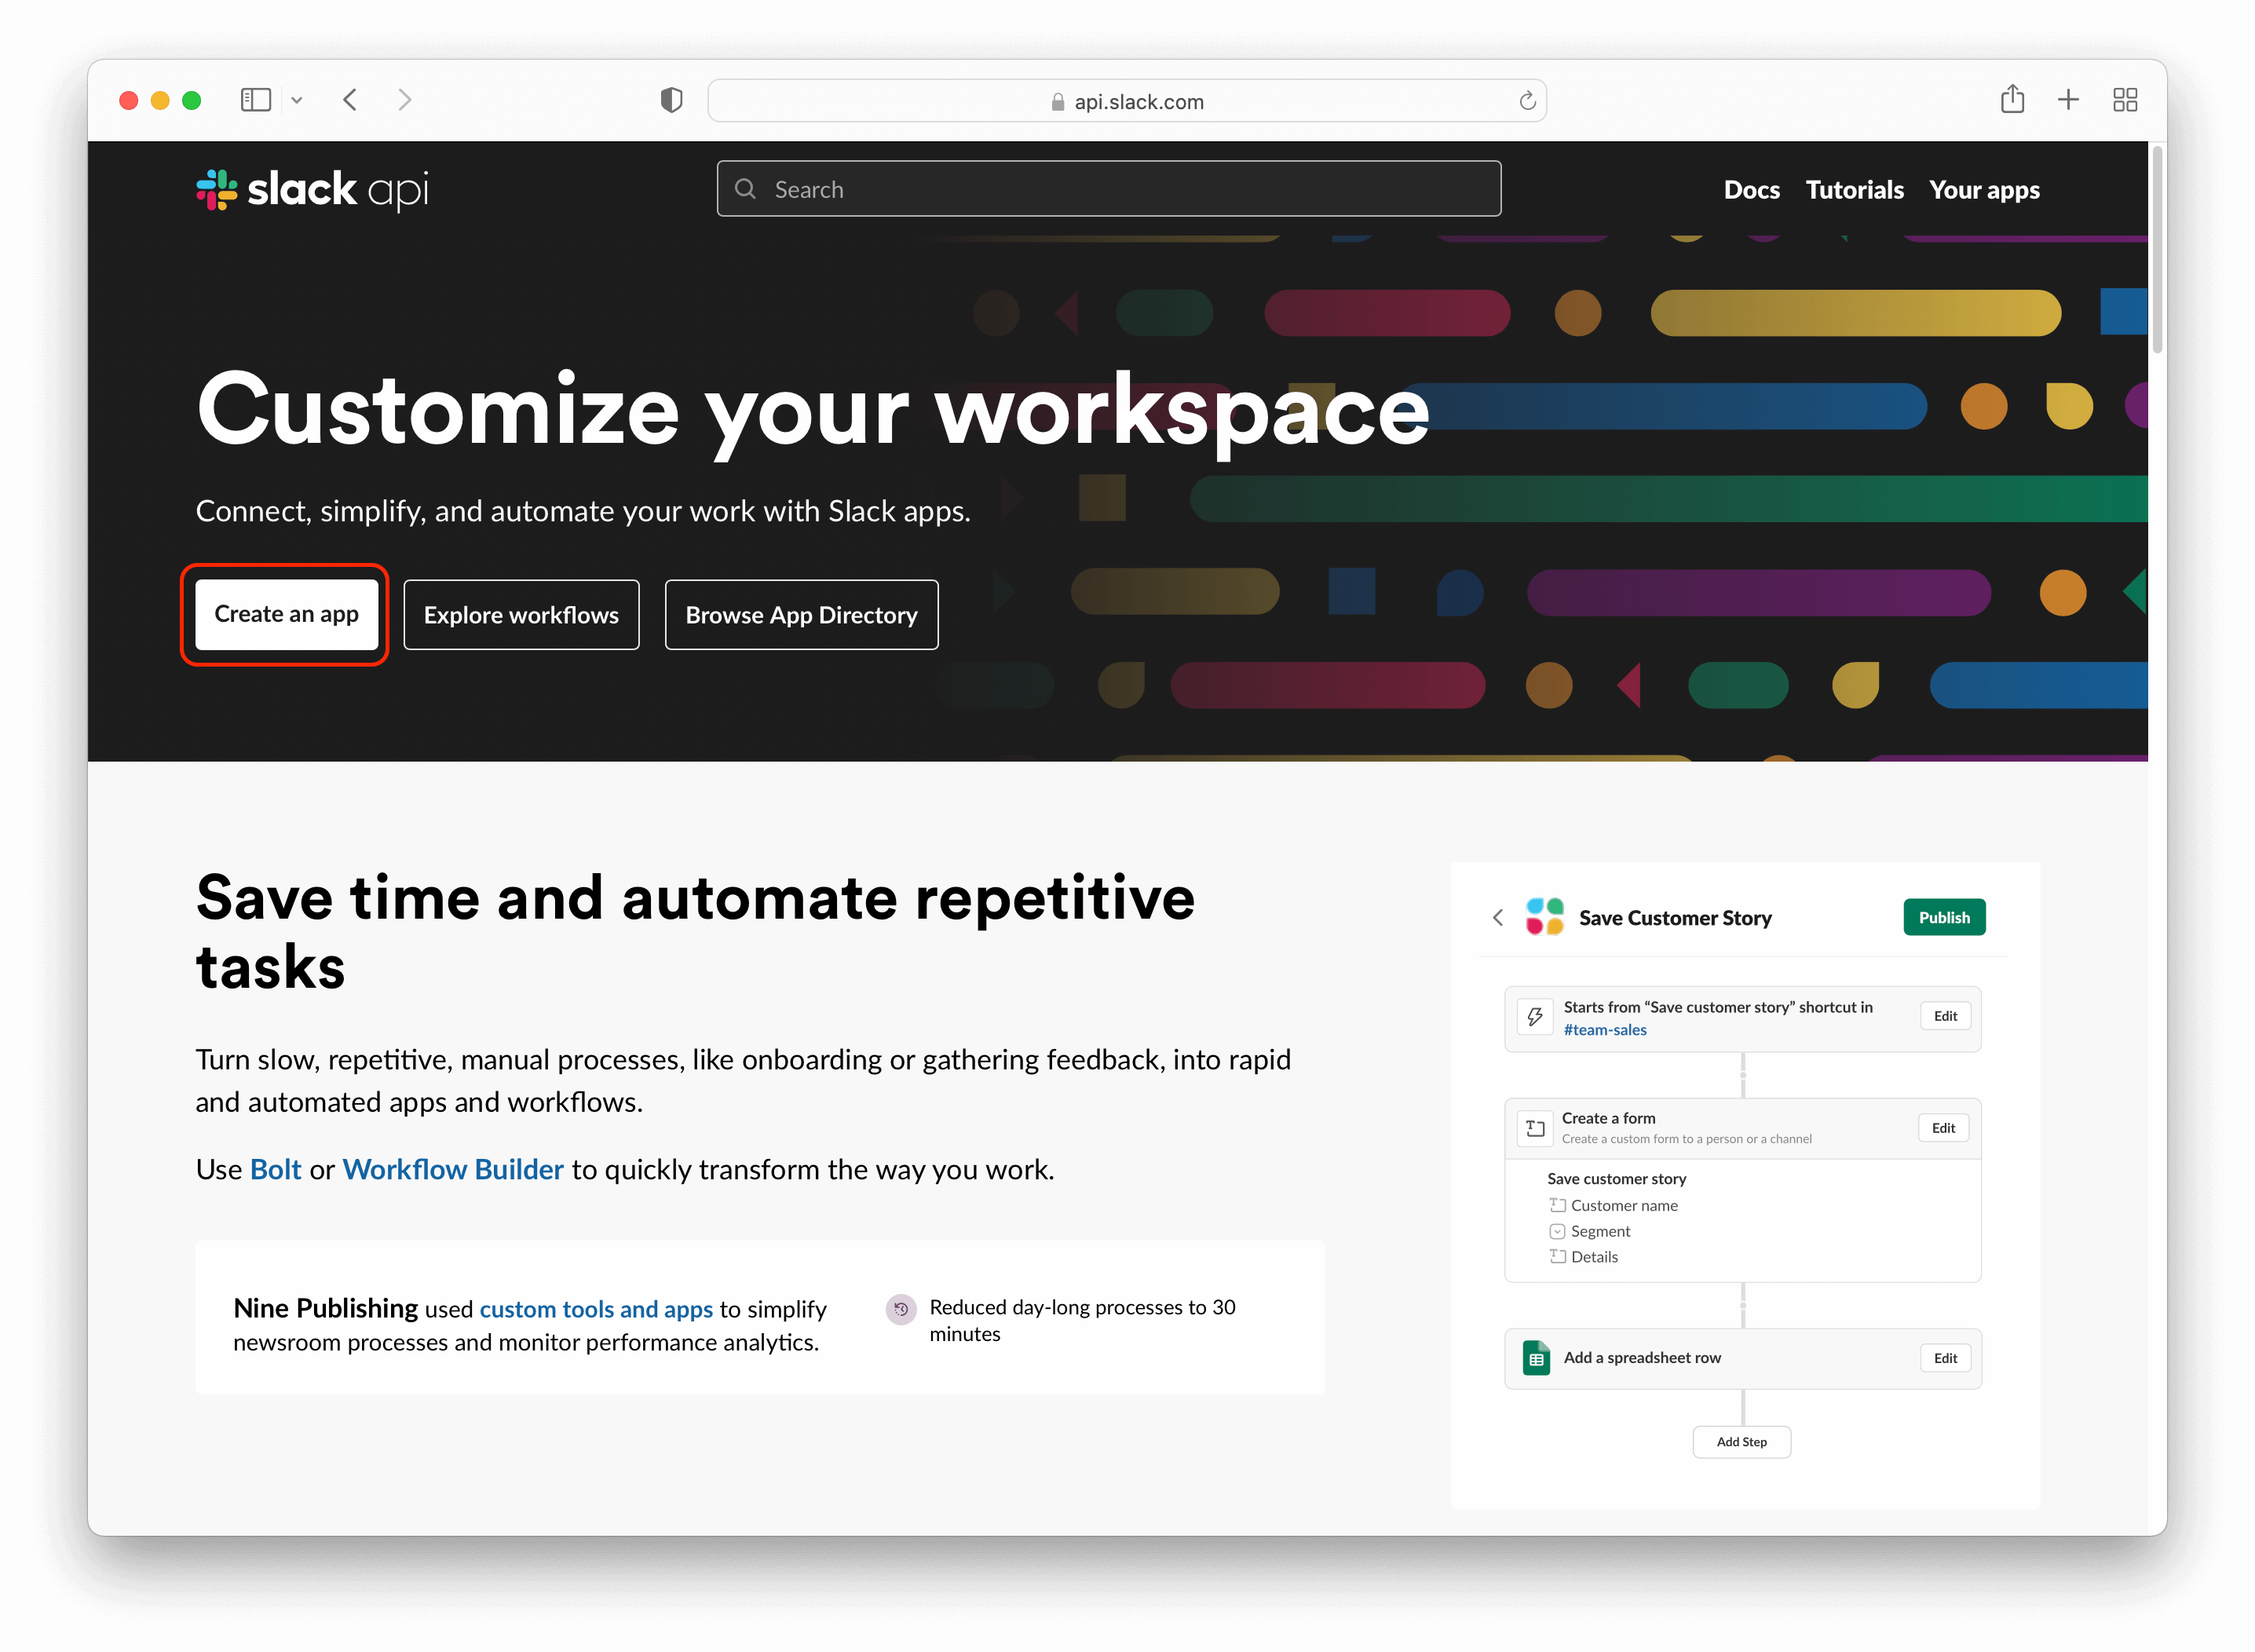 Slack API homepage